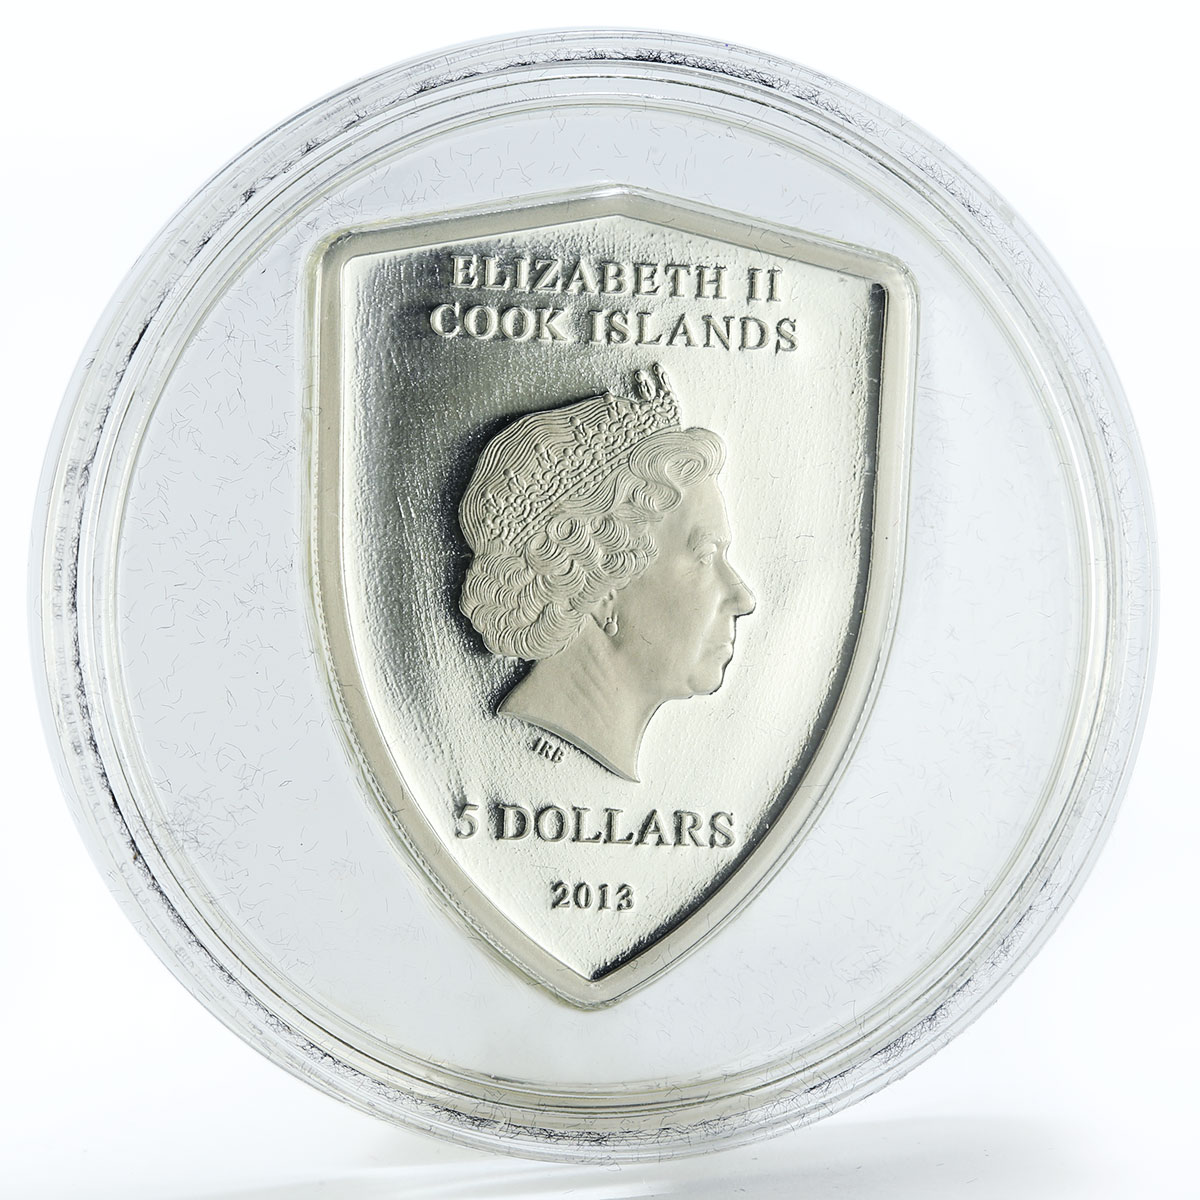 Cook Islands 5 dollars Ferrari Shield car colored silver coin 2013